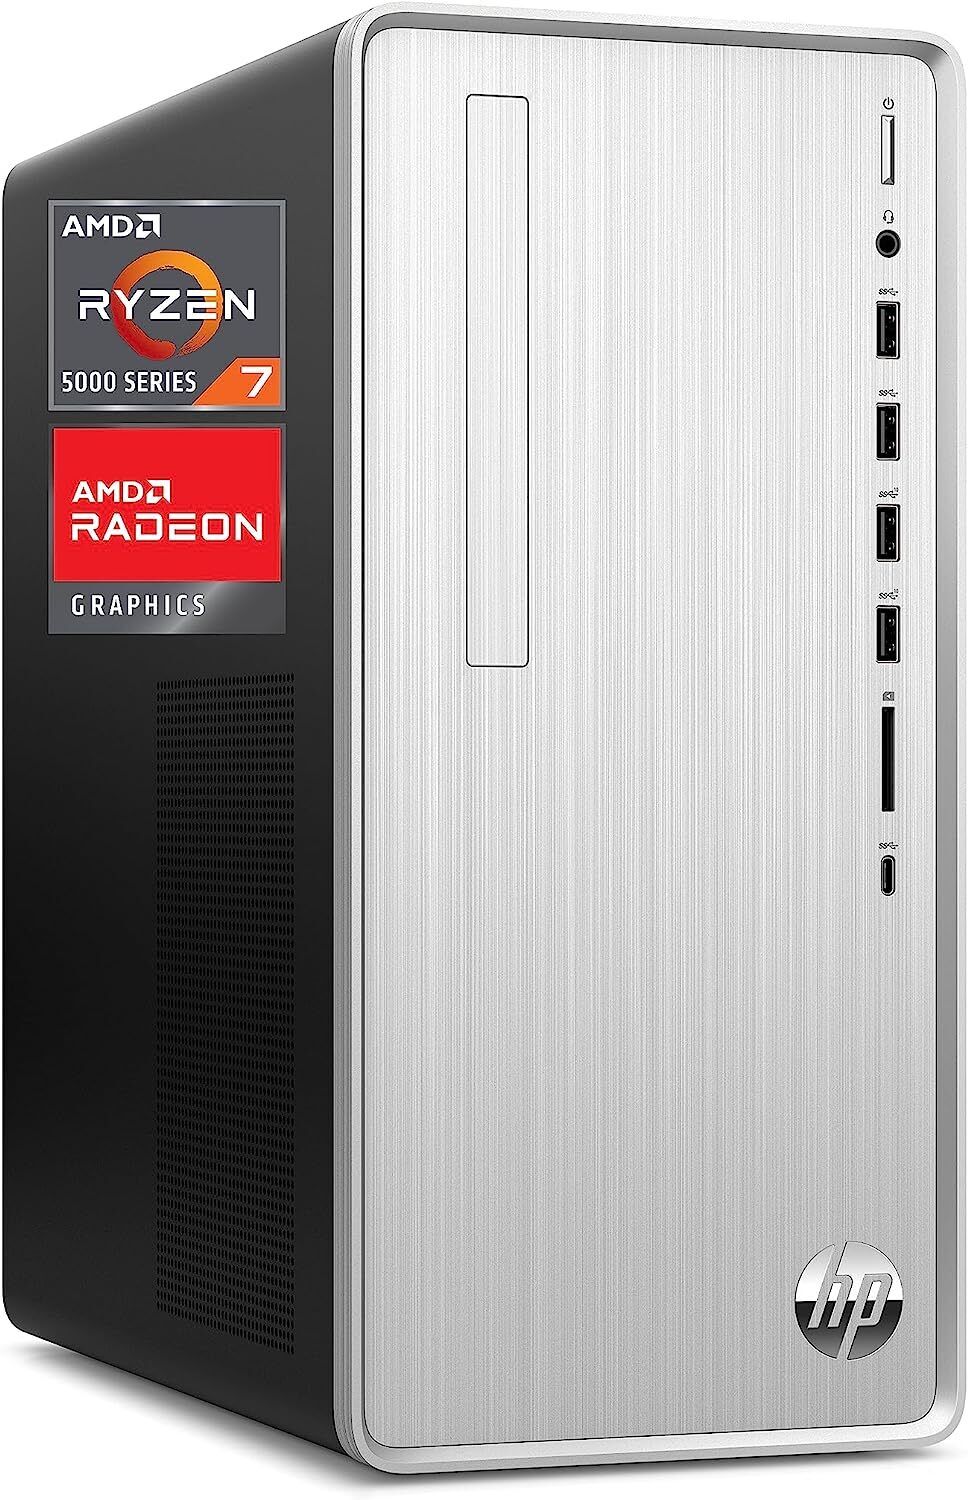 Certified Refurbished HP Pavilion Desktop TP01-2096 AMD Ryzen 7 5700G (3.8-4.6GHz) 16GB DDR4 256GB SSD Windows 11 Home 2 Year Warranty $409.99